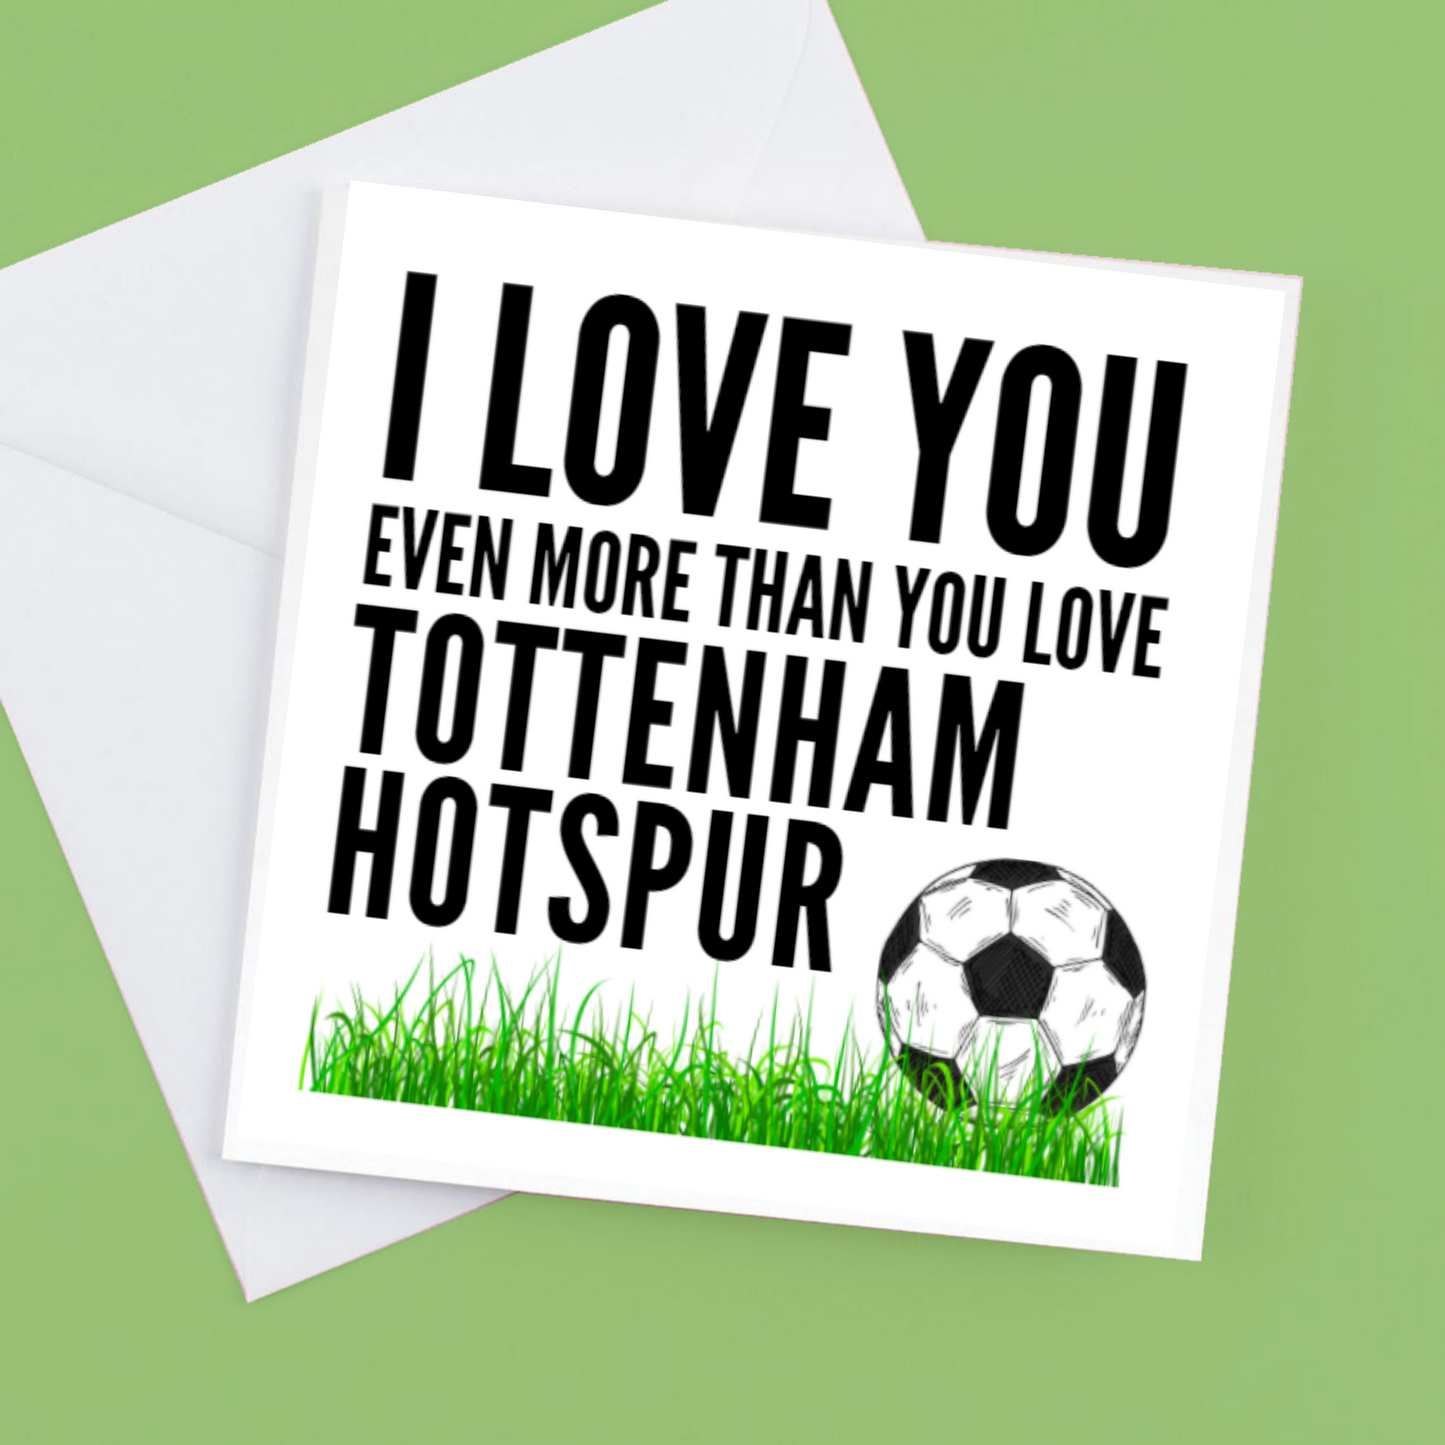 I Love you Even more than you love Tottenham Hotspur